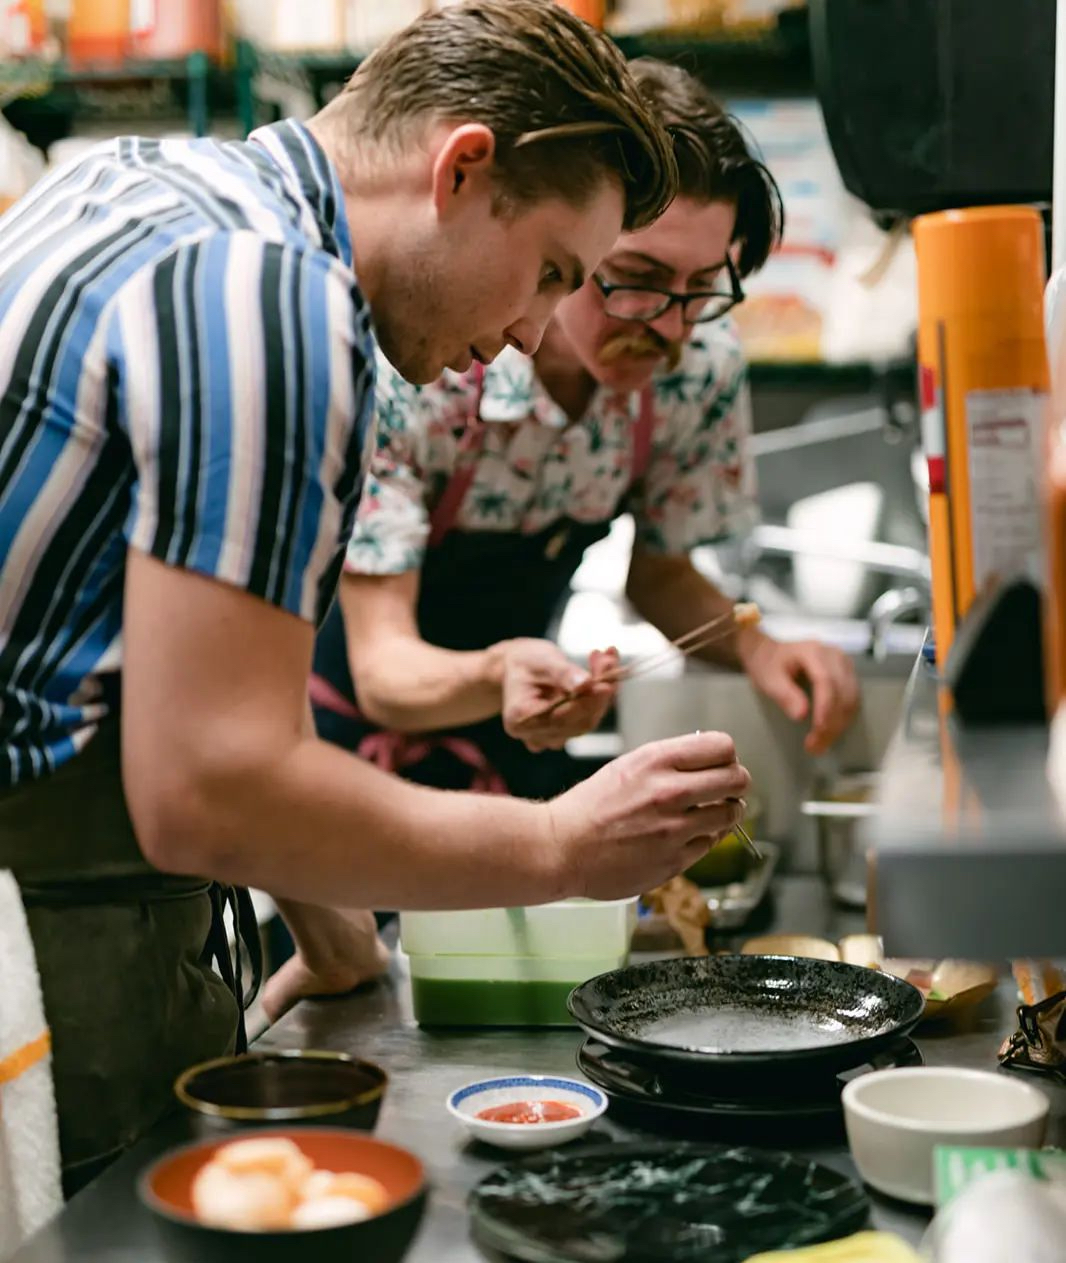 Chefs Nicholas “Nic” Webber and Jacob Jordan behind the new Oceanside restaurant Swan & Fox